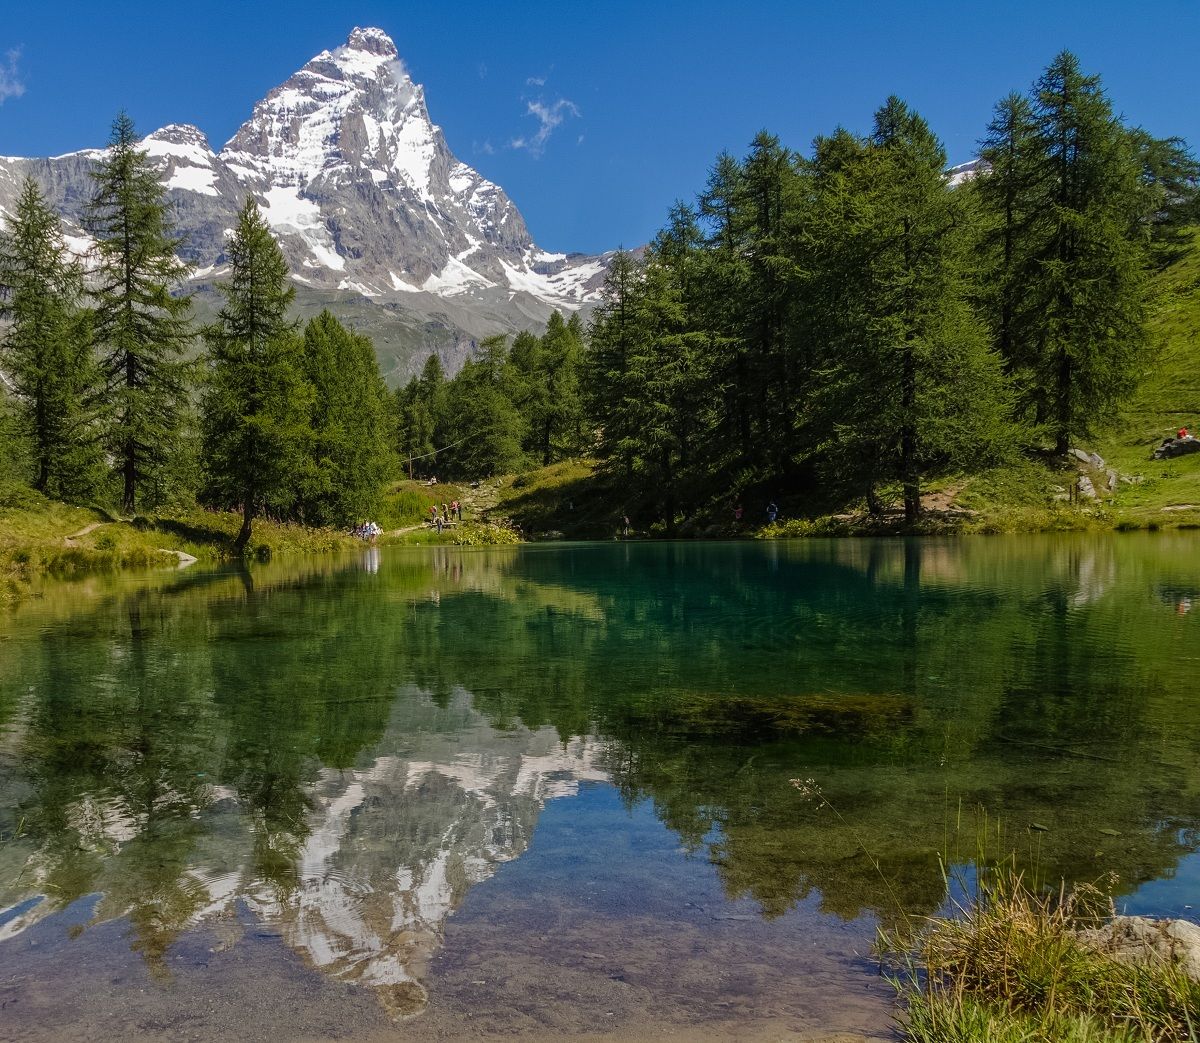 Matterhorn mirrored in the blue lake....